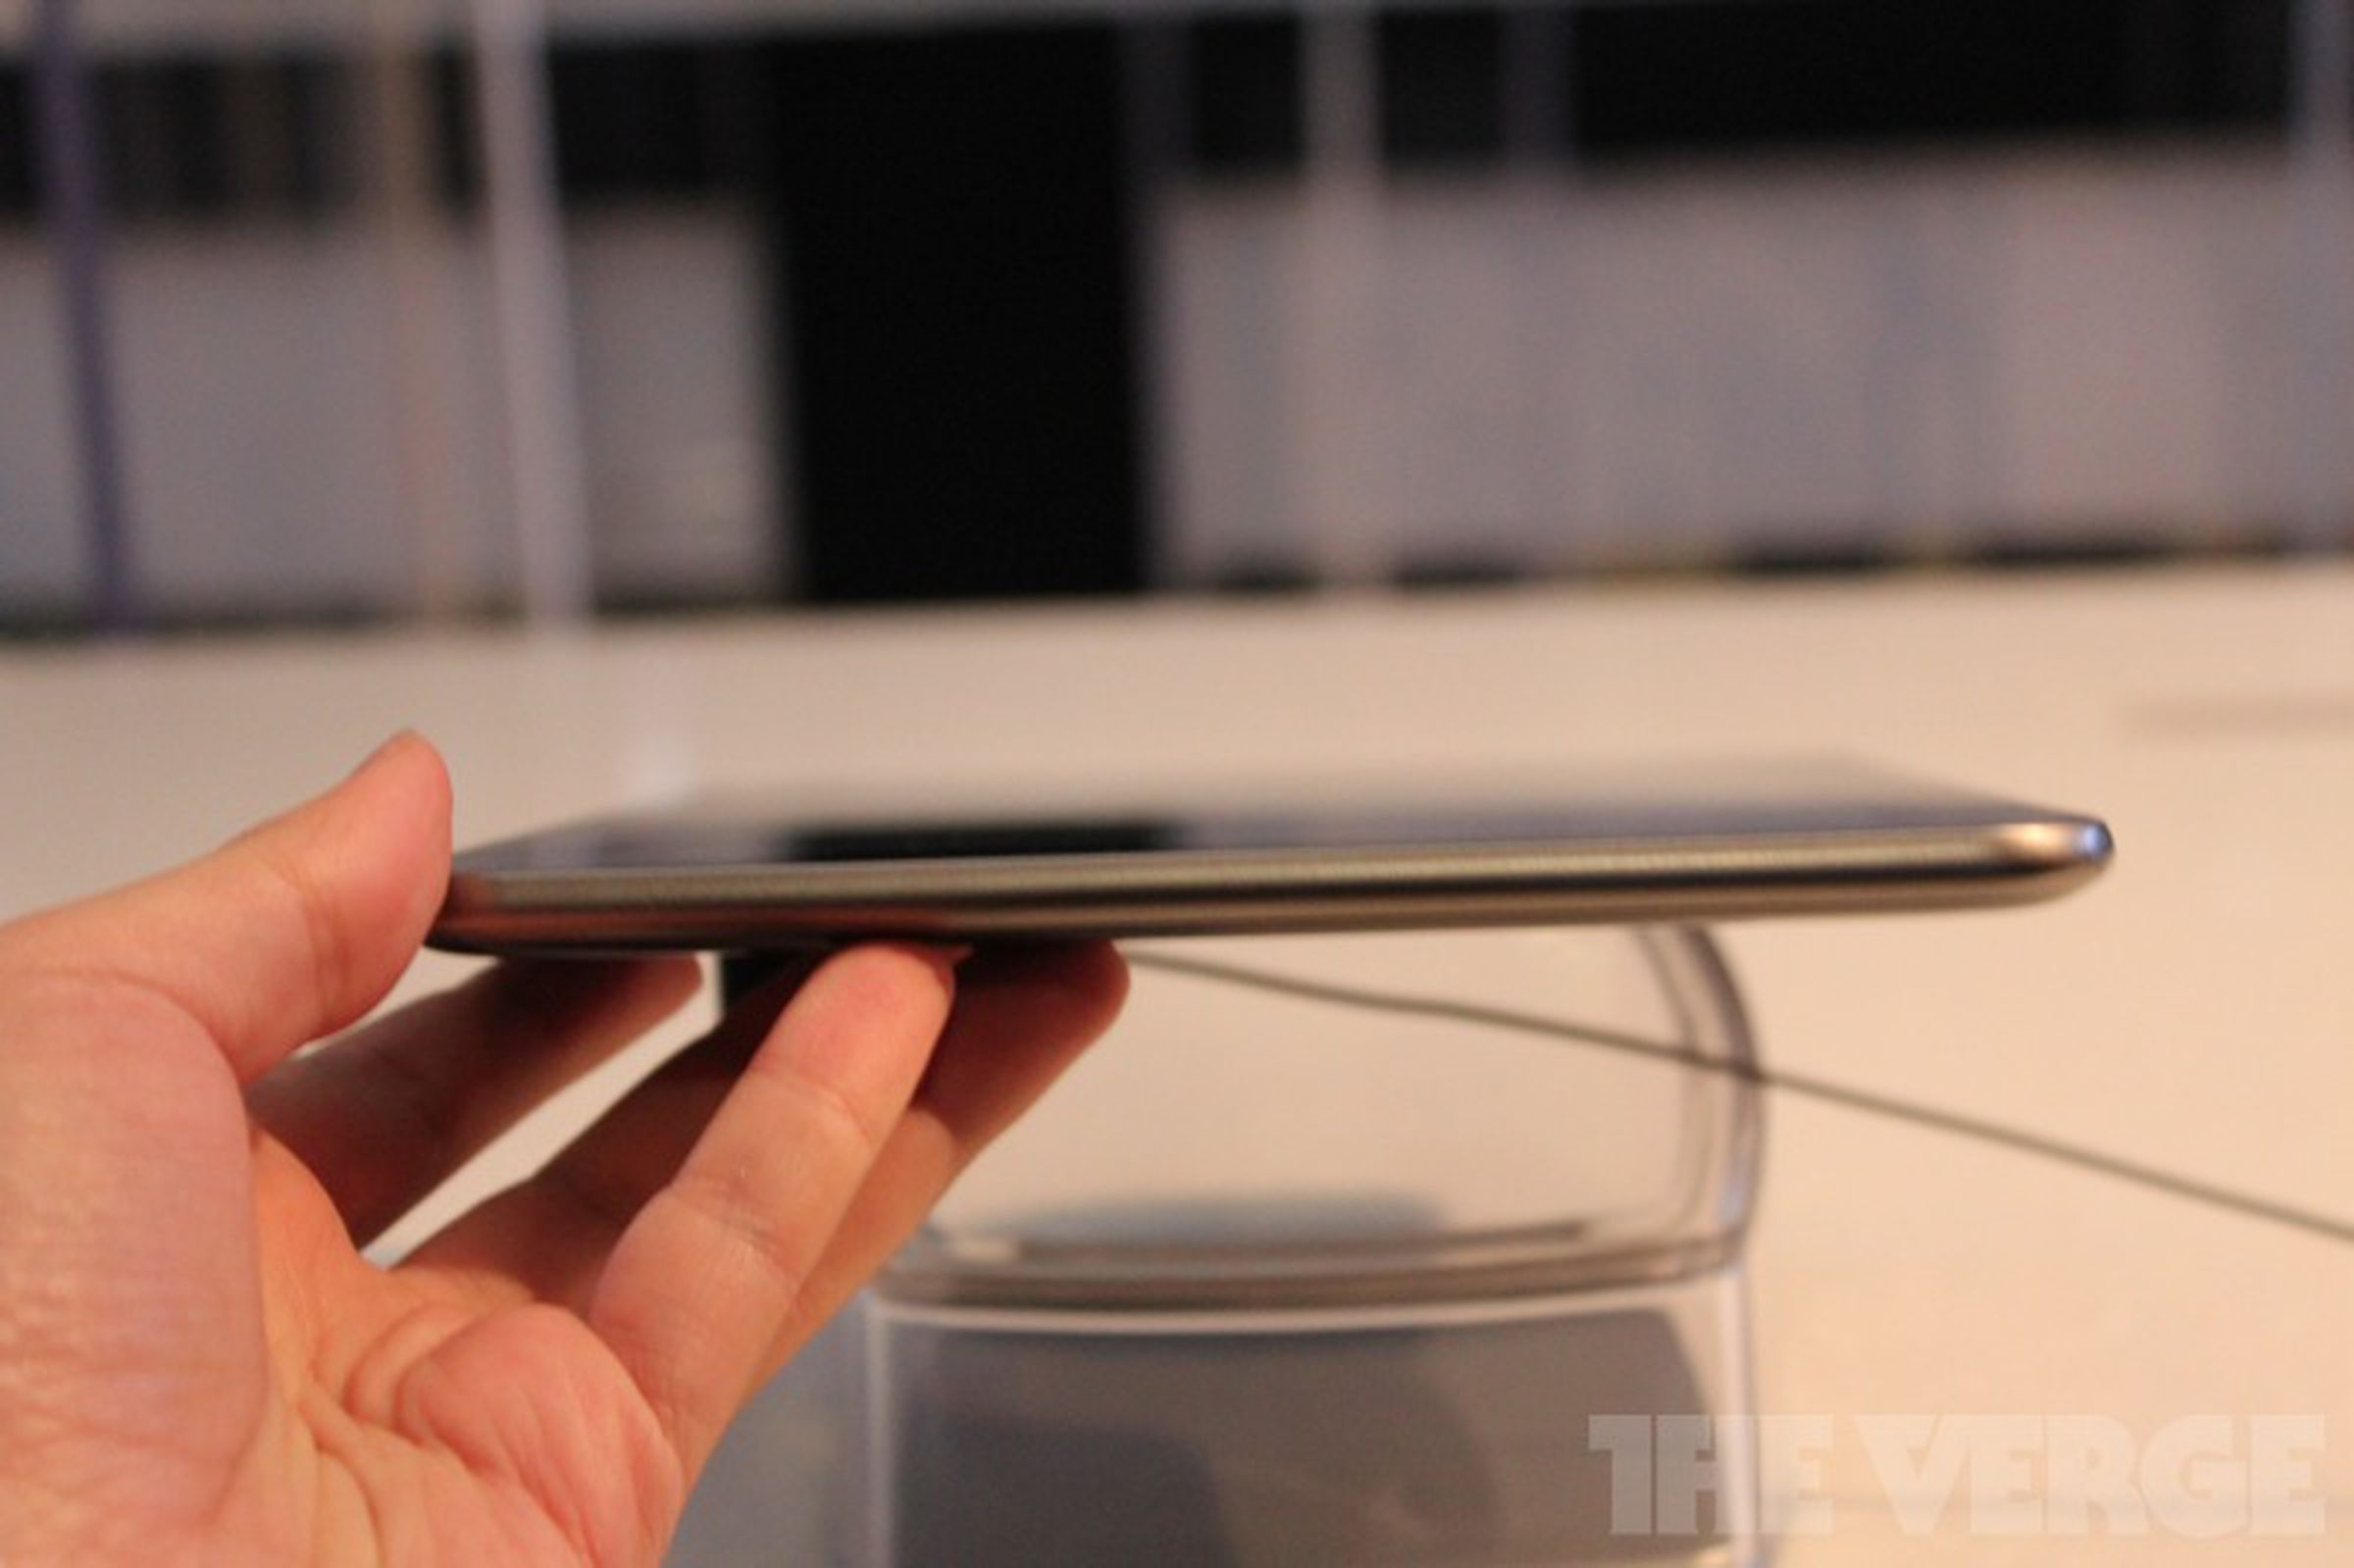 Samsung Galaxy Tab 8.9 hands-on